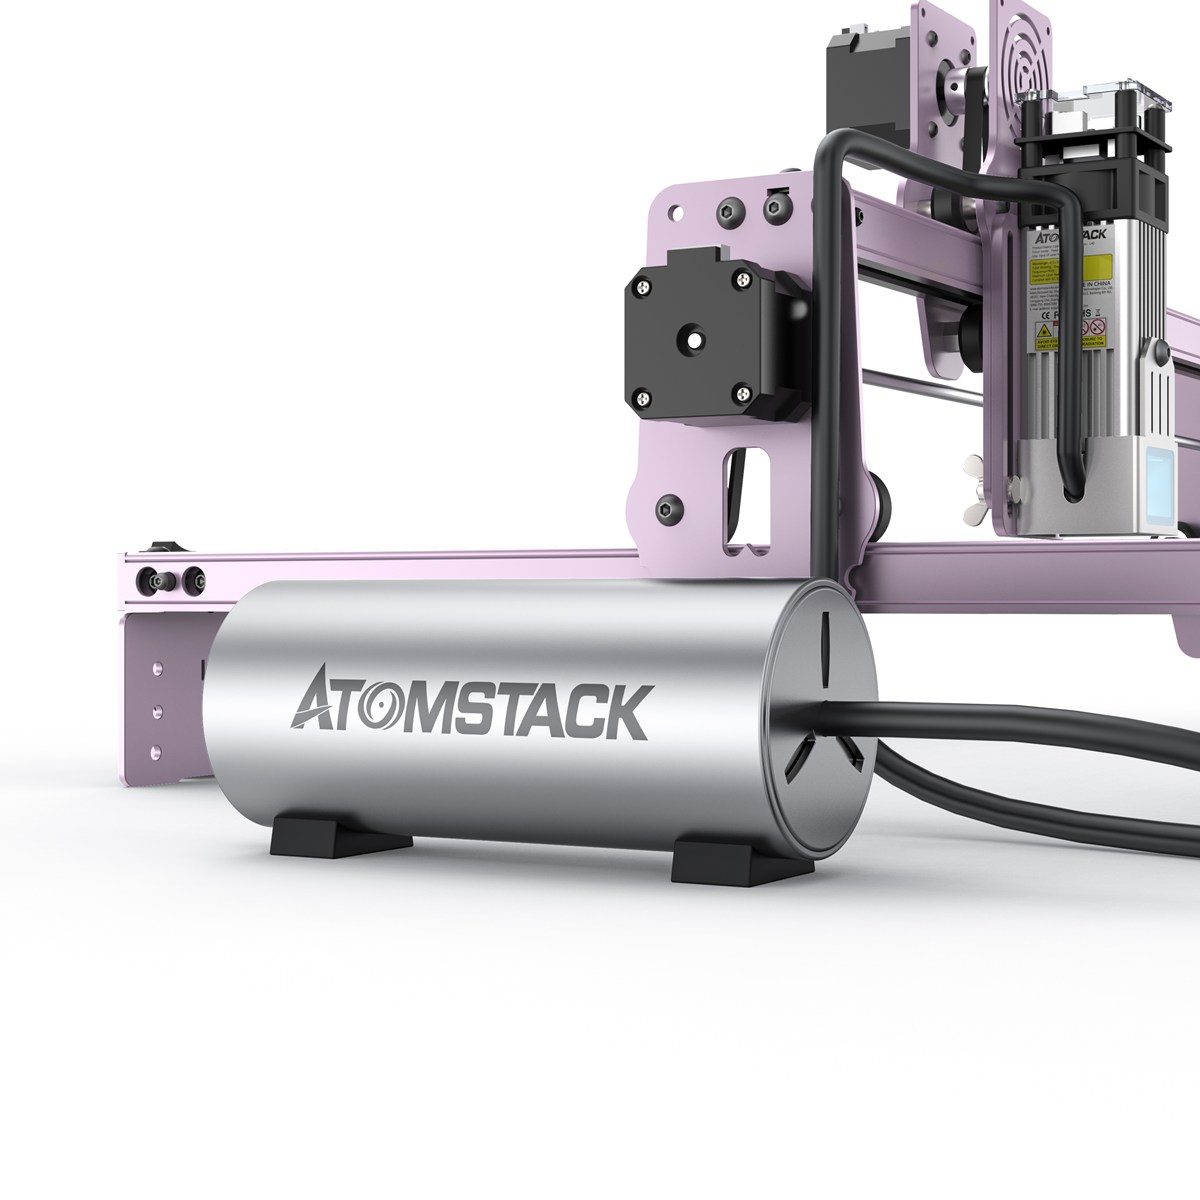 Atomstack-Air-Assist-System-for-Laser-Engraving-Machine-Laser-Cutting-Engraving-Air-assisted-Accesso-1932834-10